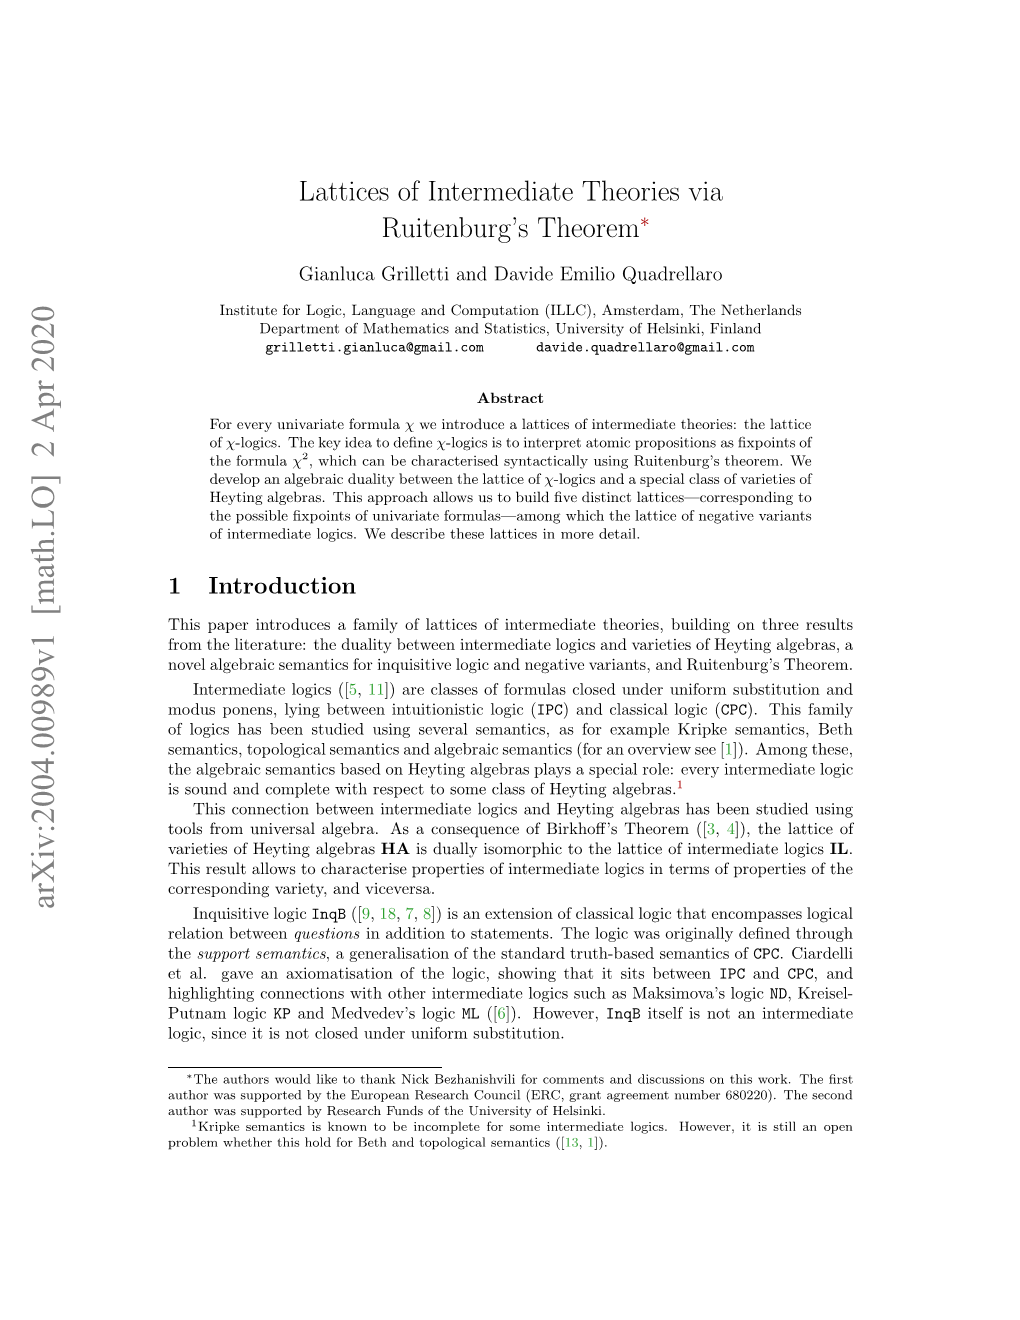 Lattices of Intermediate Theories Via Ruitenburg's Theorem